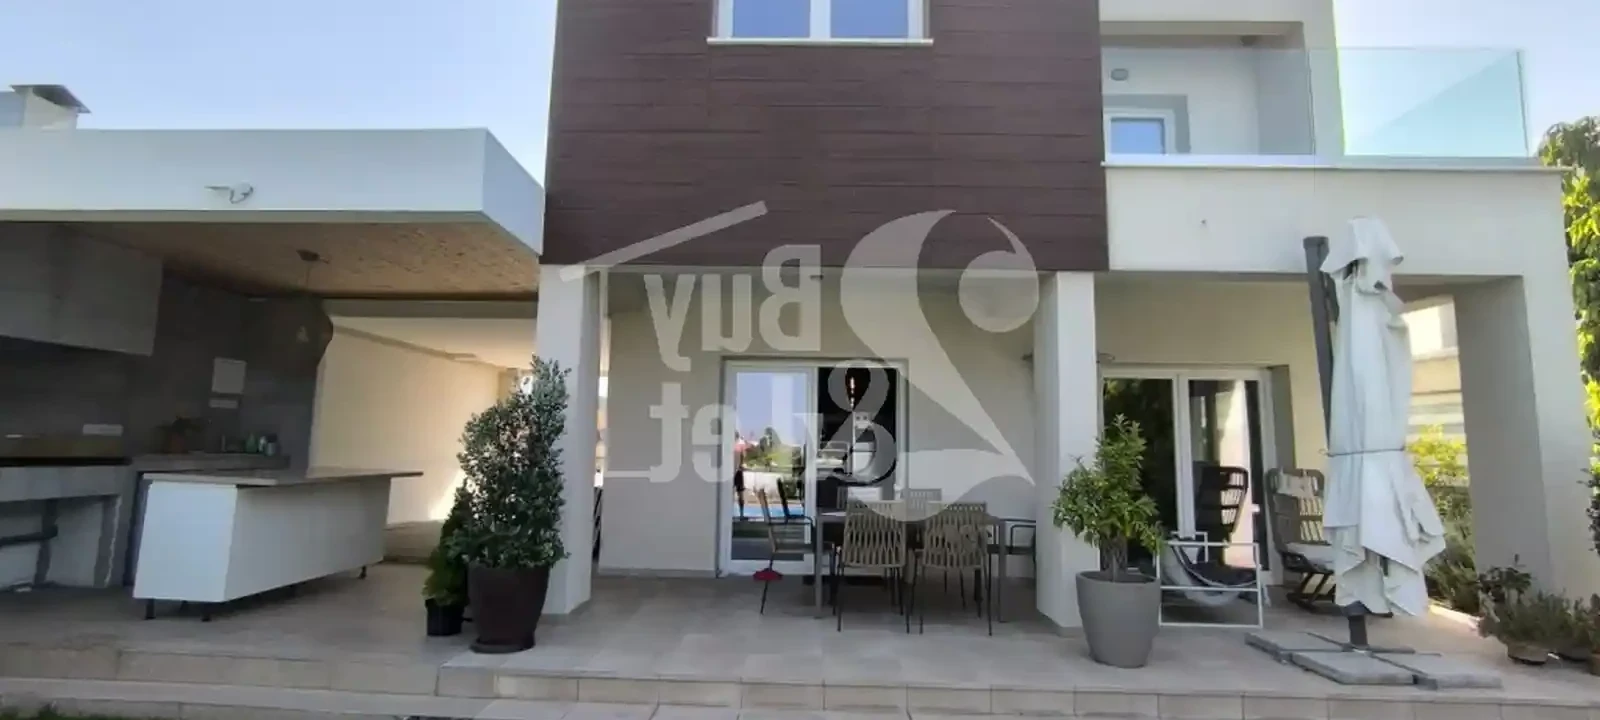 3-bedroom villa fоr sаle €640.000, image 1